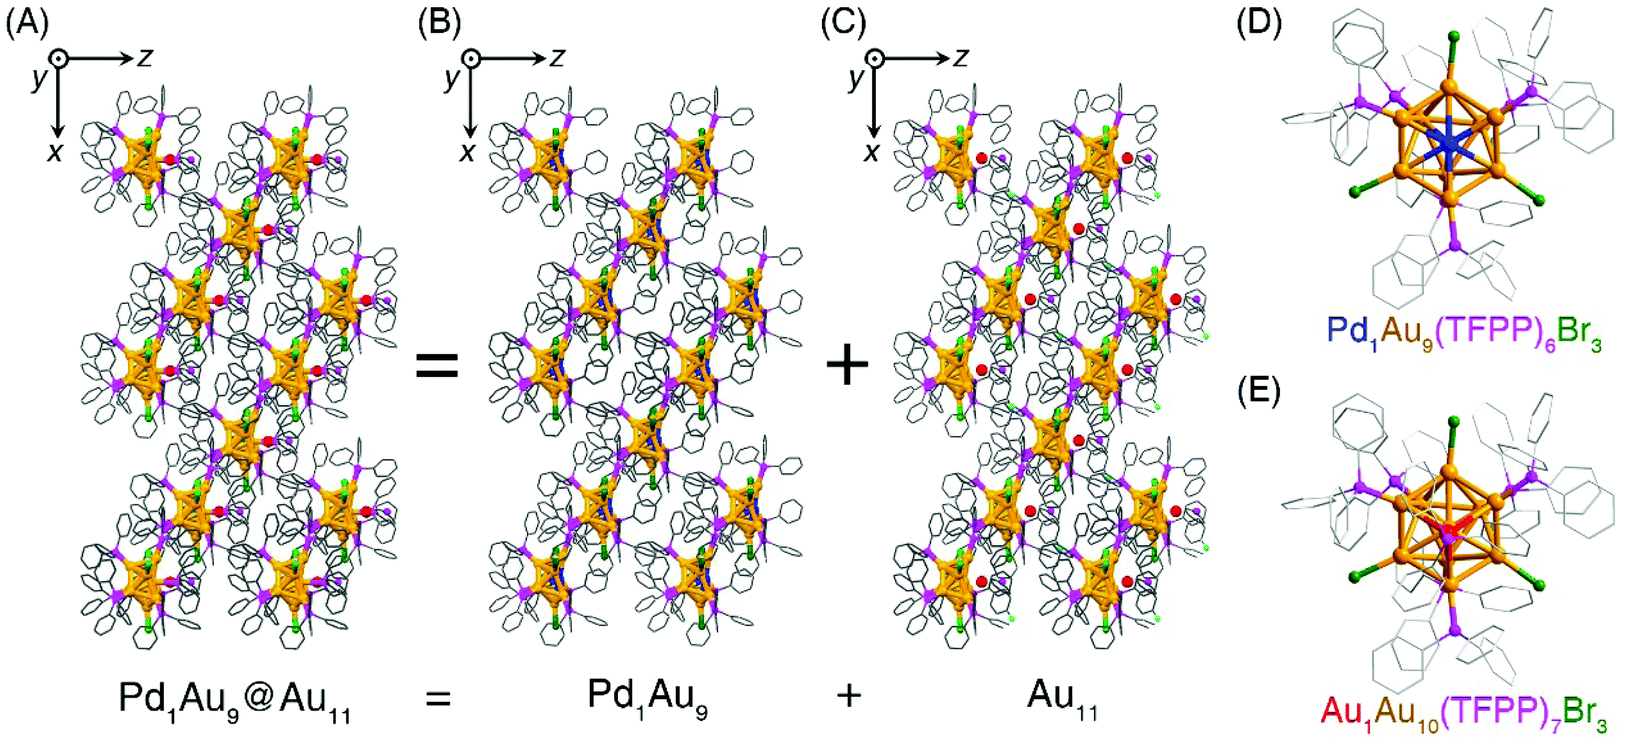 Cocrystallization-driven stabilization of metastable nanoclusters: a case  study of Pd 1 Au 9 - Nanoscale (RSC Publishing) DOI:10.1039/D1NR00721A